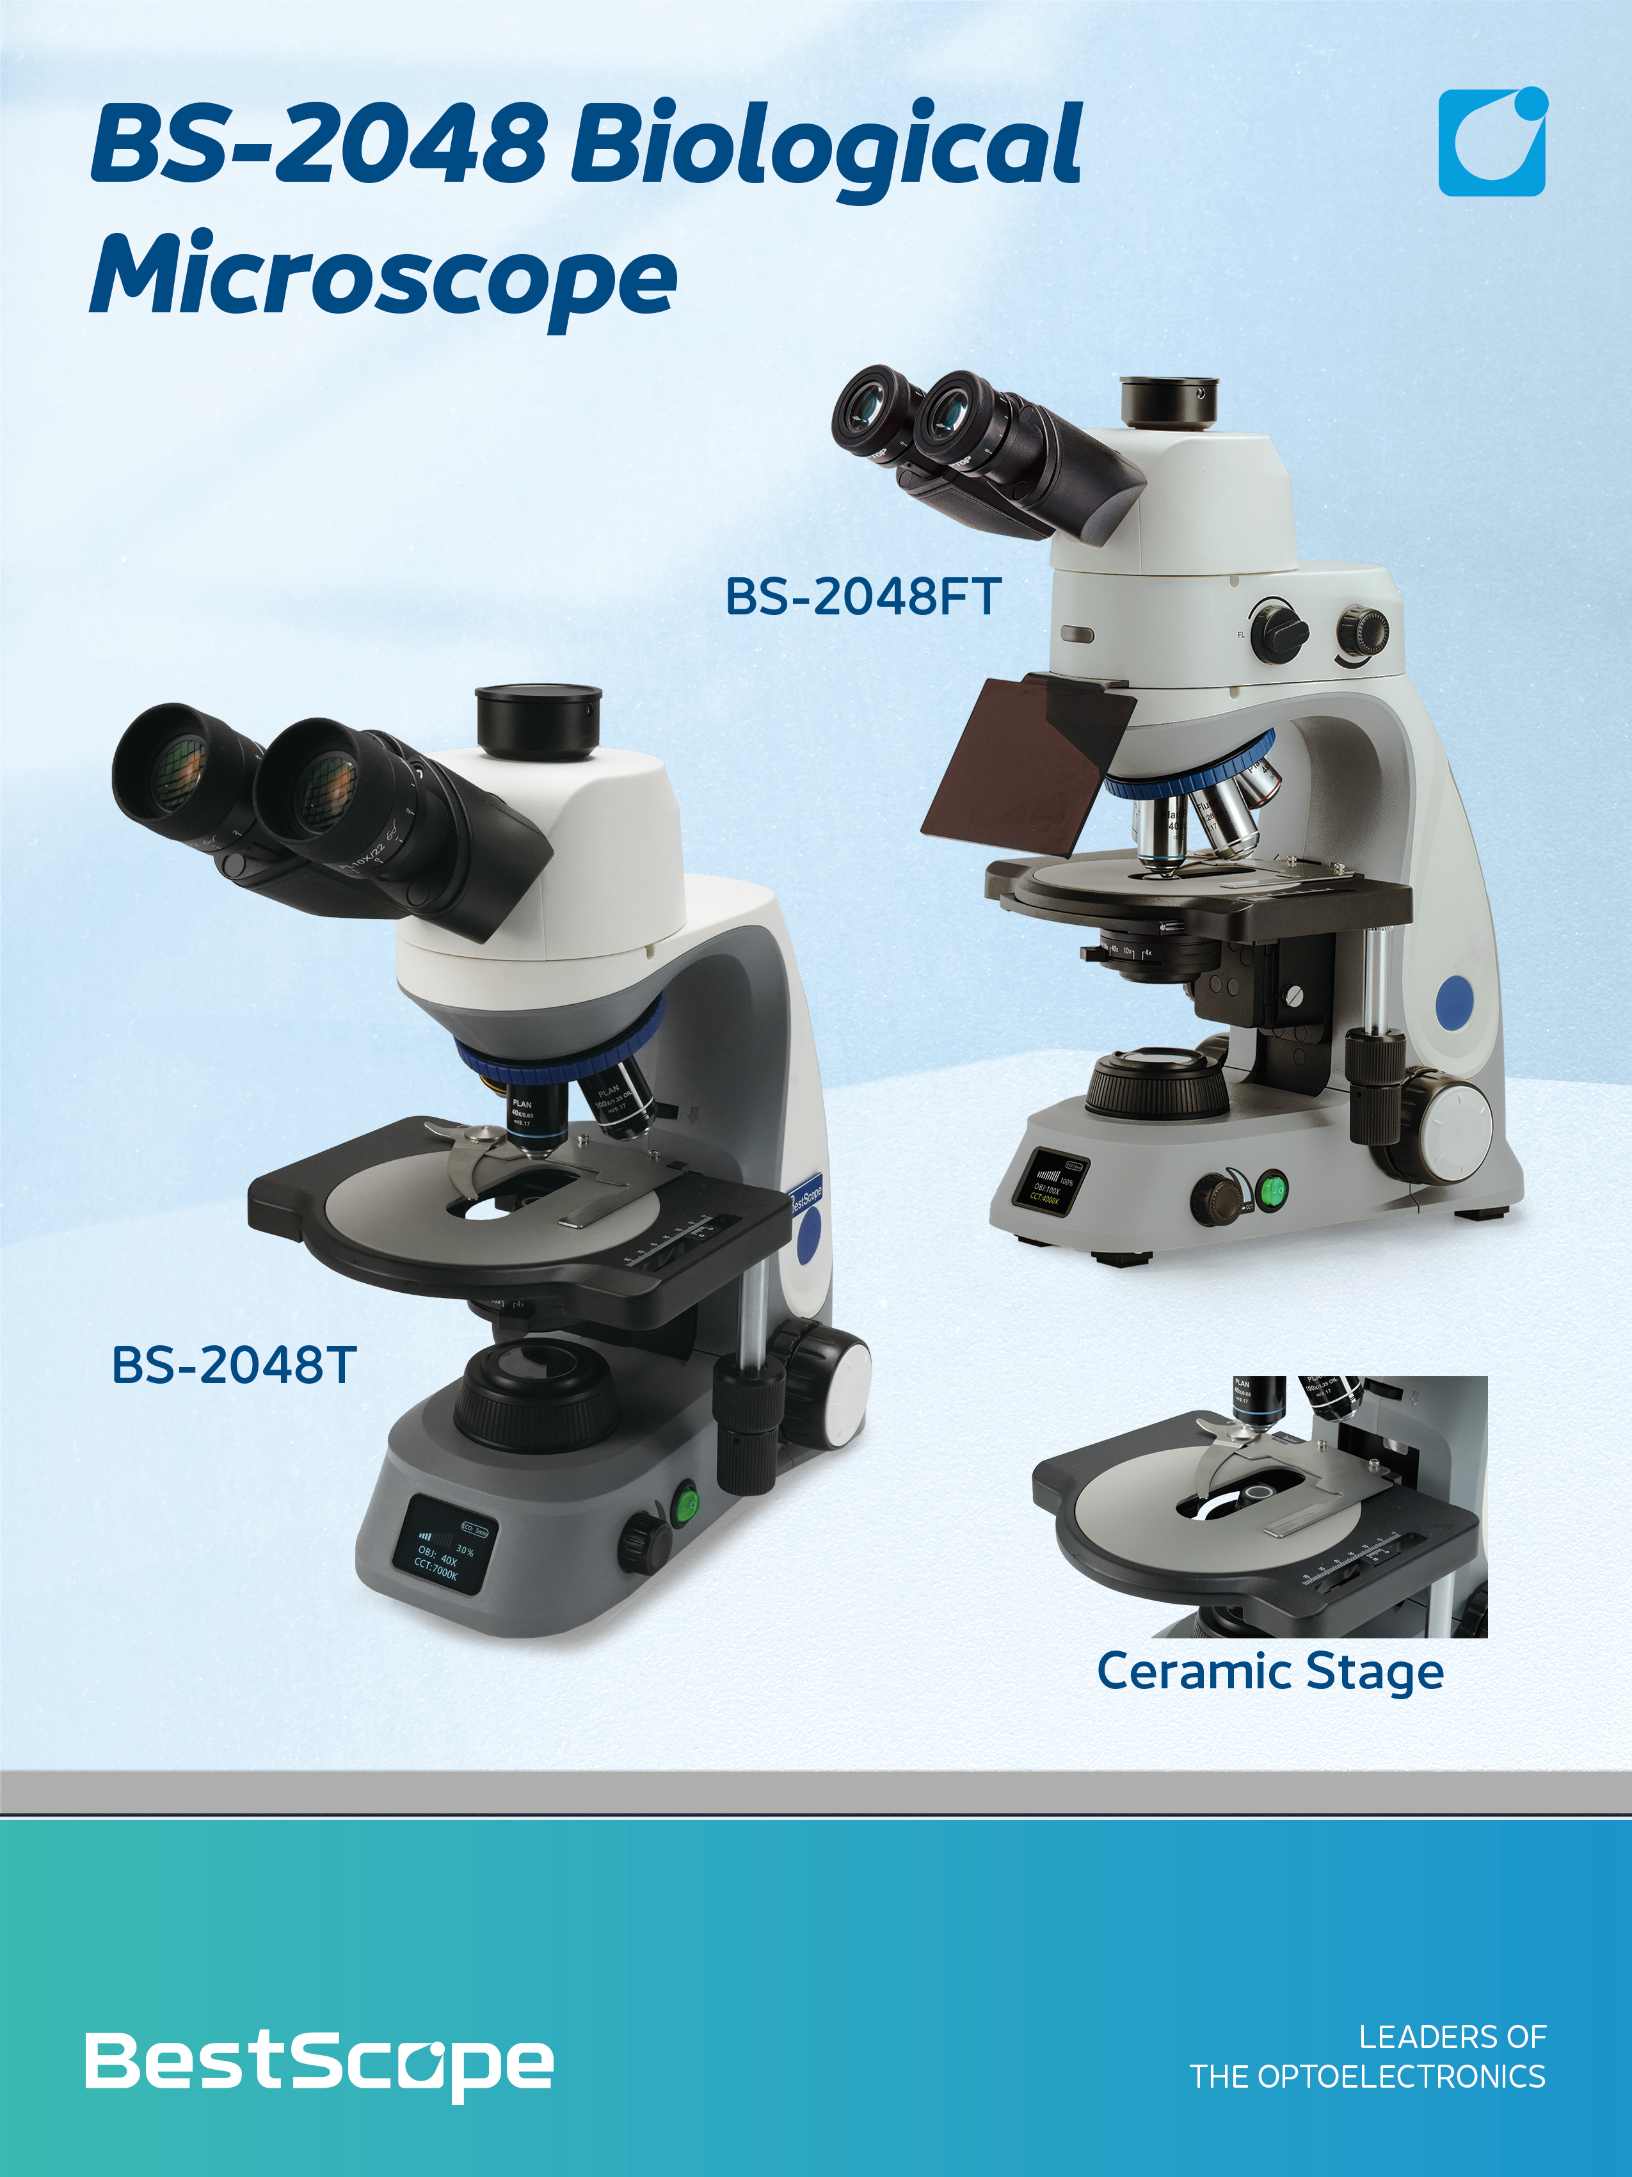 Bioloogiline mikroskoop BS-2048